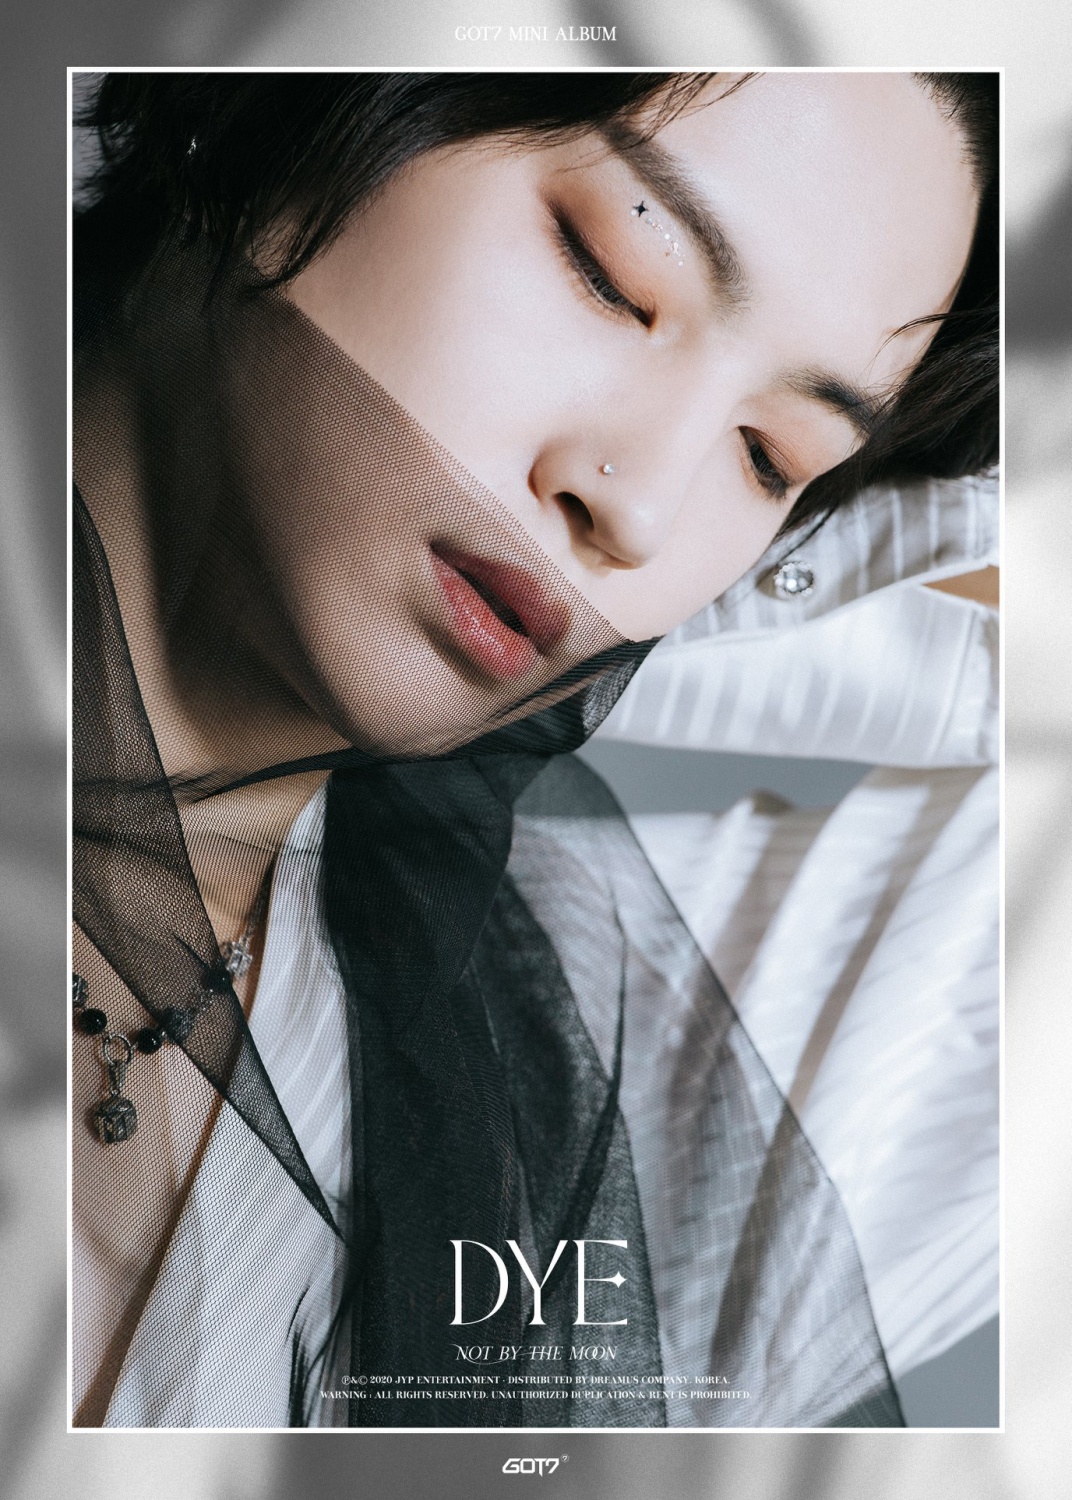 GOT7 Flaunt Elegant, Romantic Visuals in New "DYE" Teasers